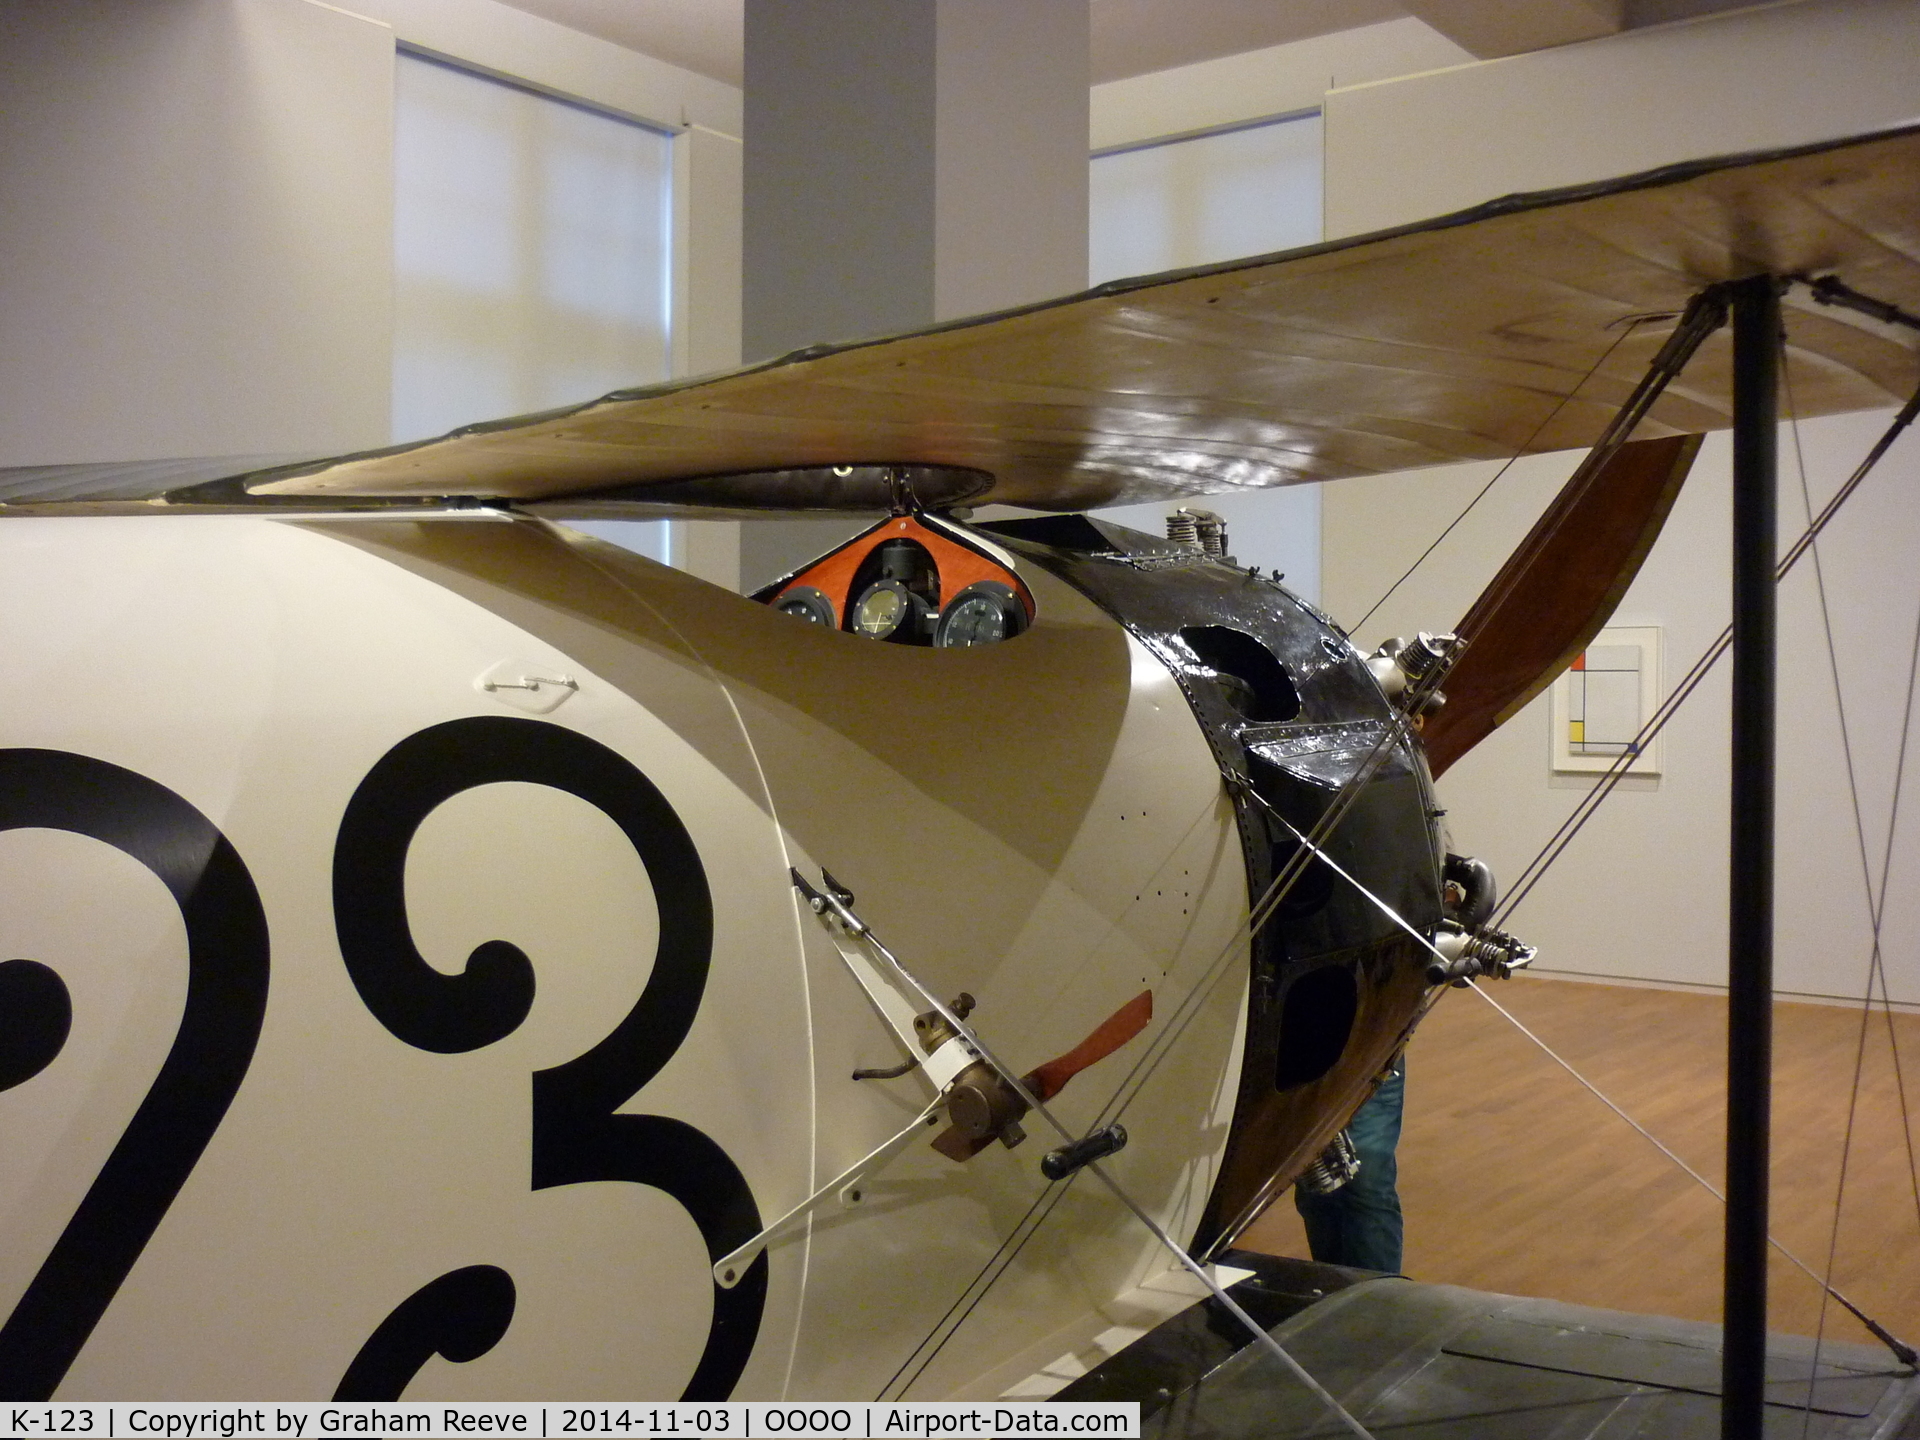 K-123, 1920 British Aerial Transport Company Ltd FK-23 Bantam C/N 15, On display at the Rijksmuseum in Amsterdam.